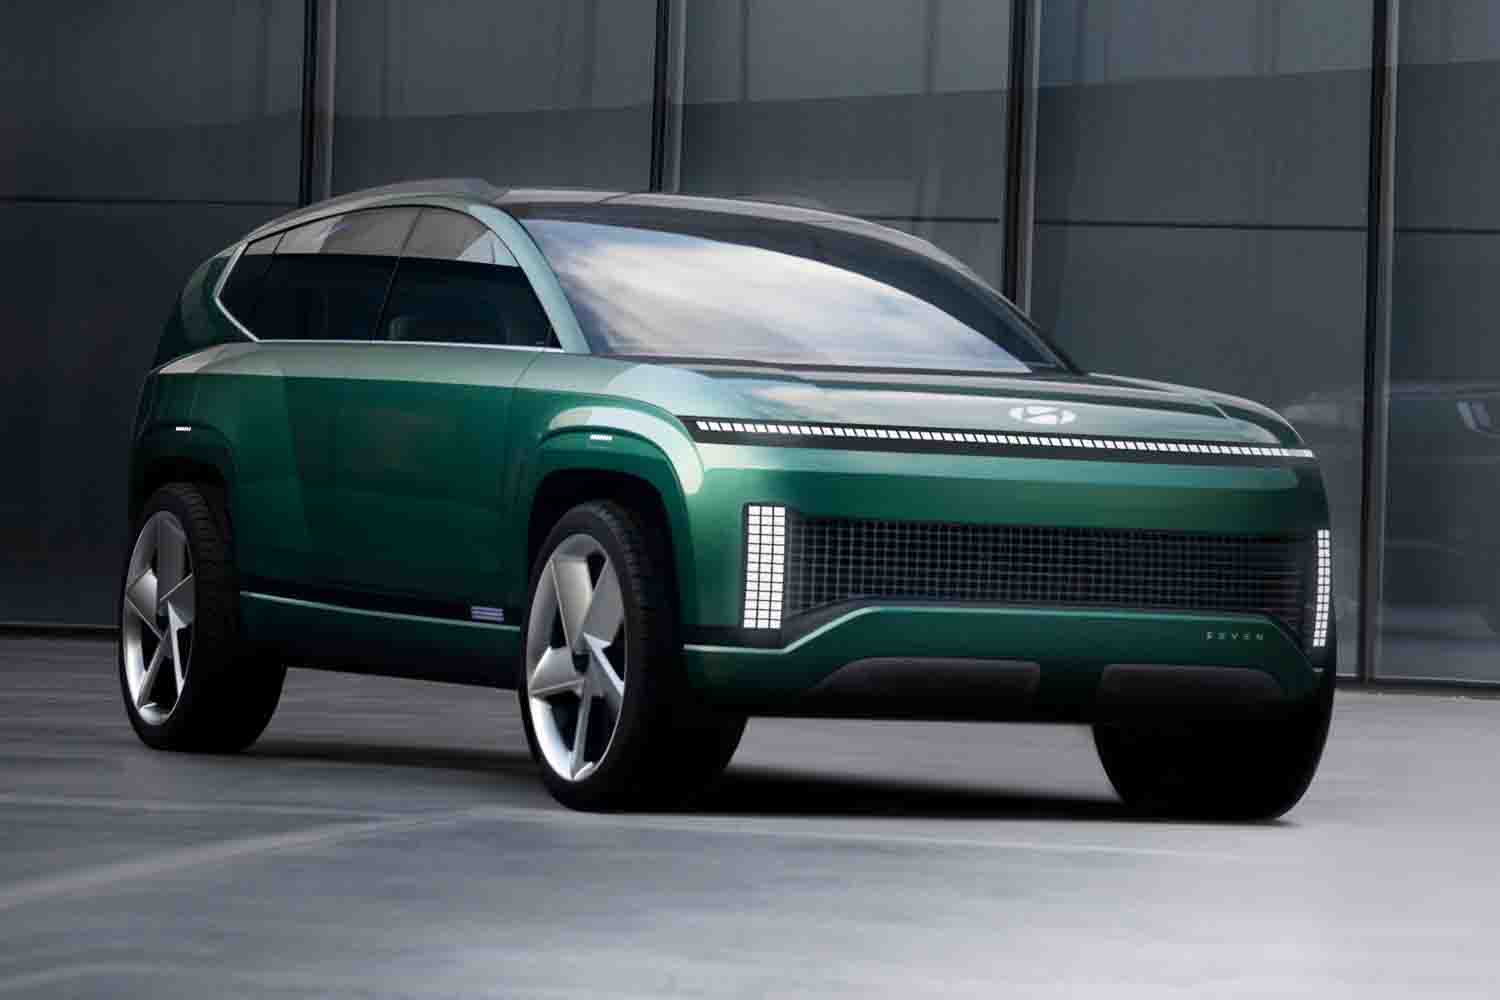 Car News | Hyundai reveals eye-catching Seven SUV electric concept | CompleteCar.ie